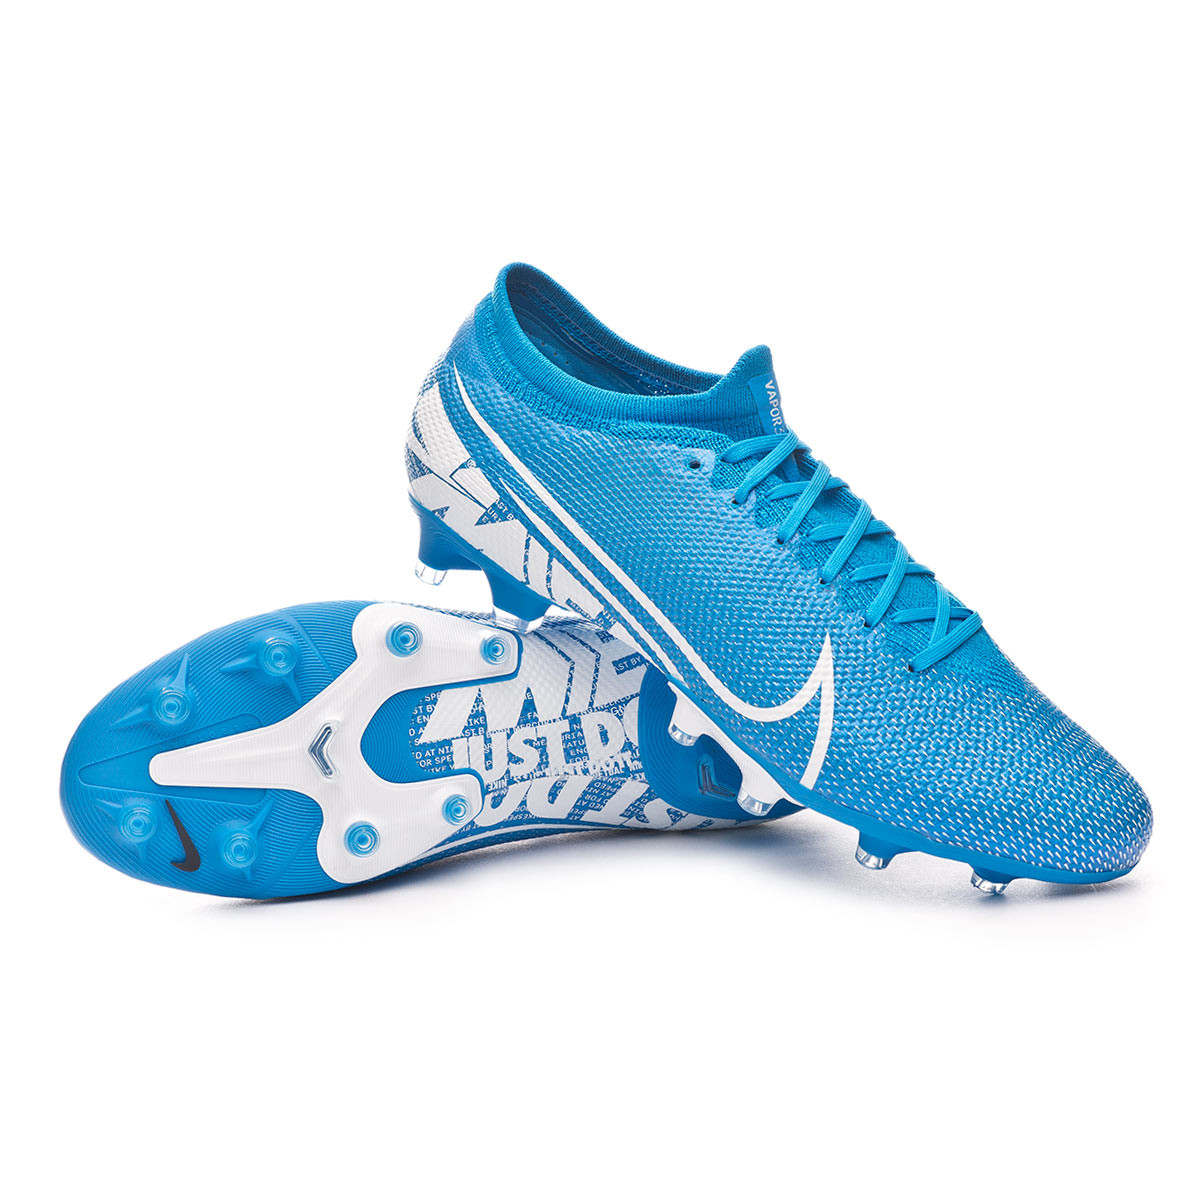 Football Boots Nike Mercurial Vapor XIII Pro AG-Pro Blue  hero-White-Obsidian - Football store Fútbol Emotion